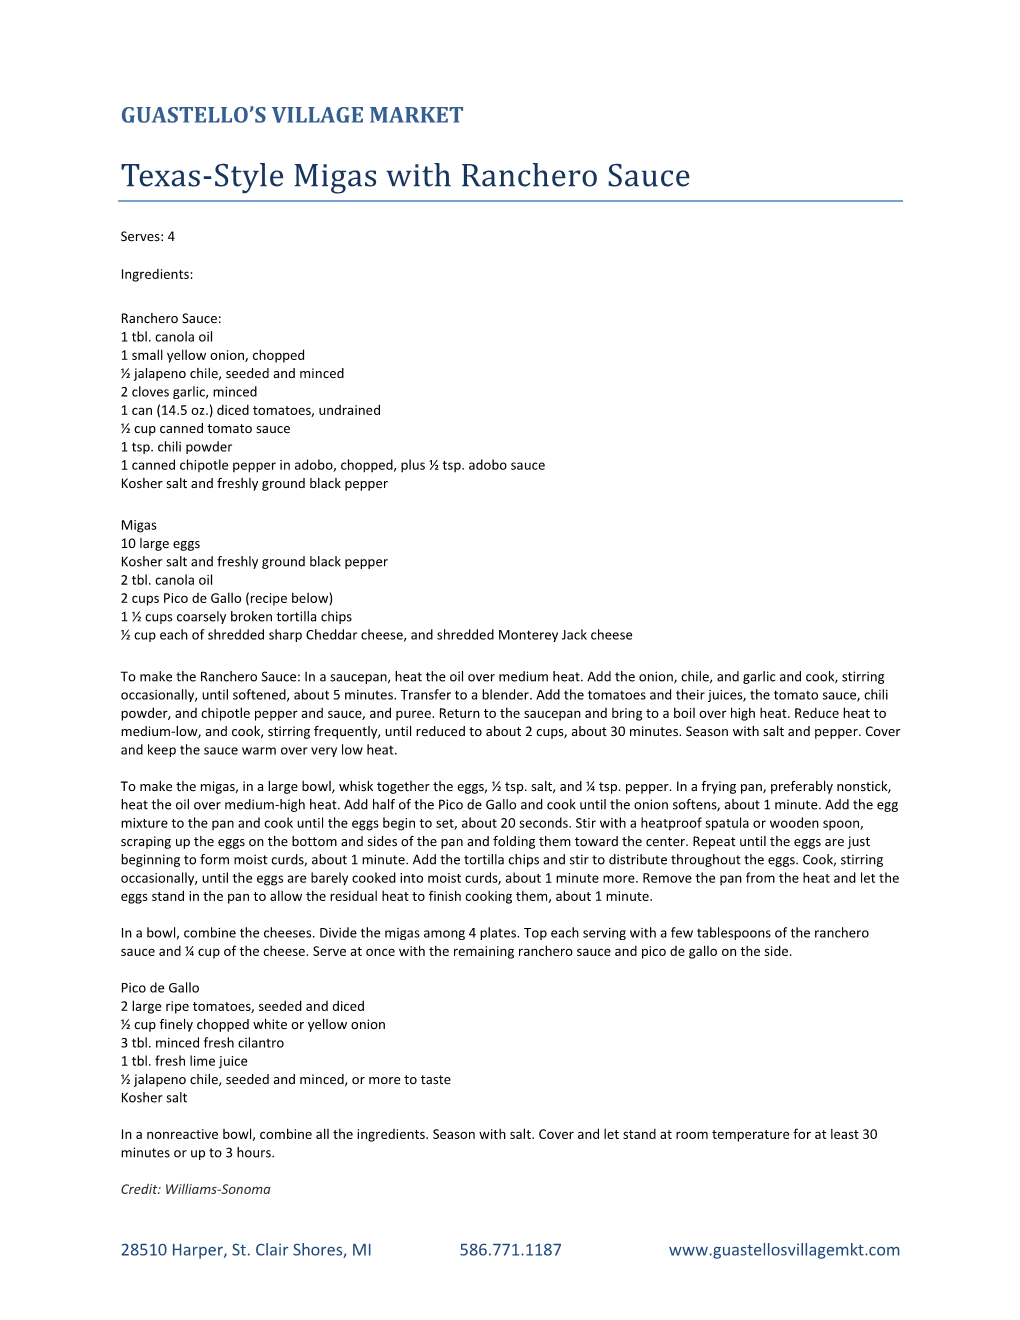 Texas-Style Migas with Ranchero Sauce